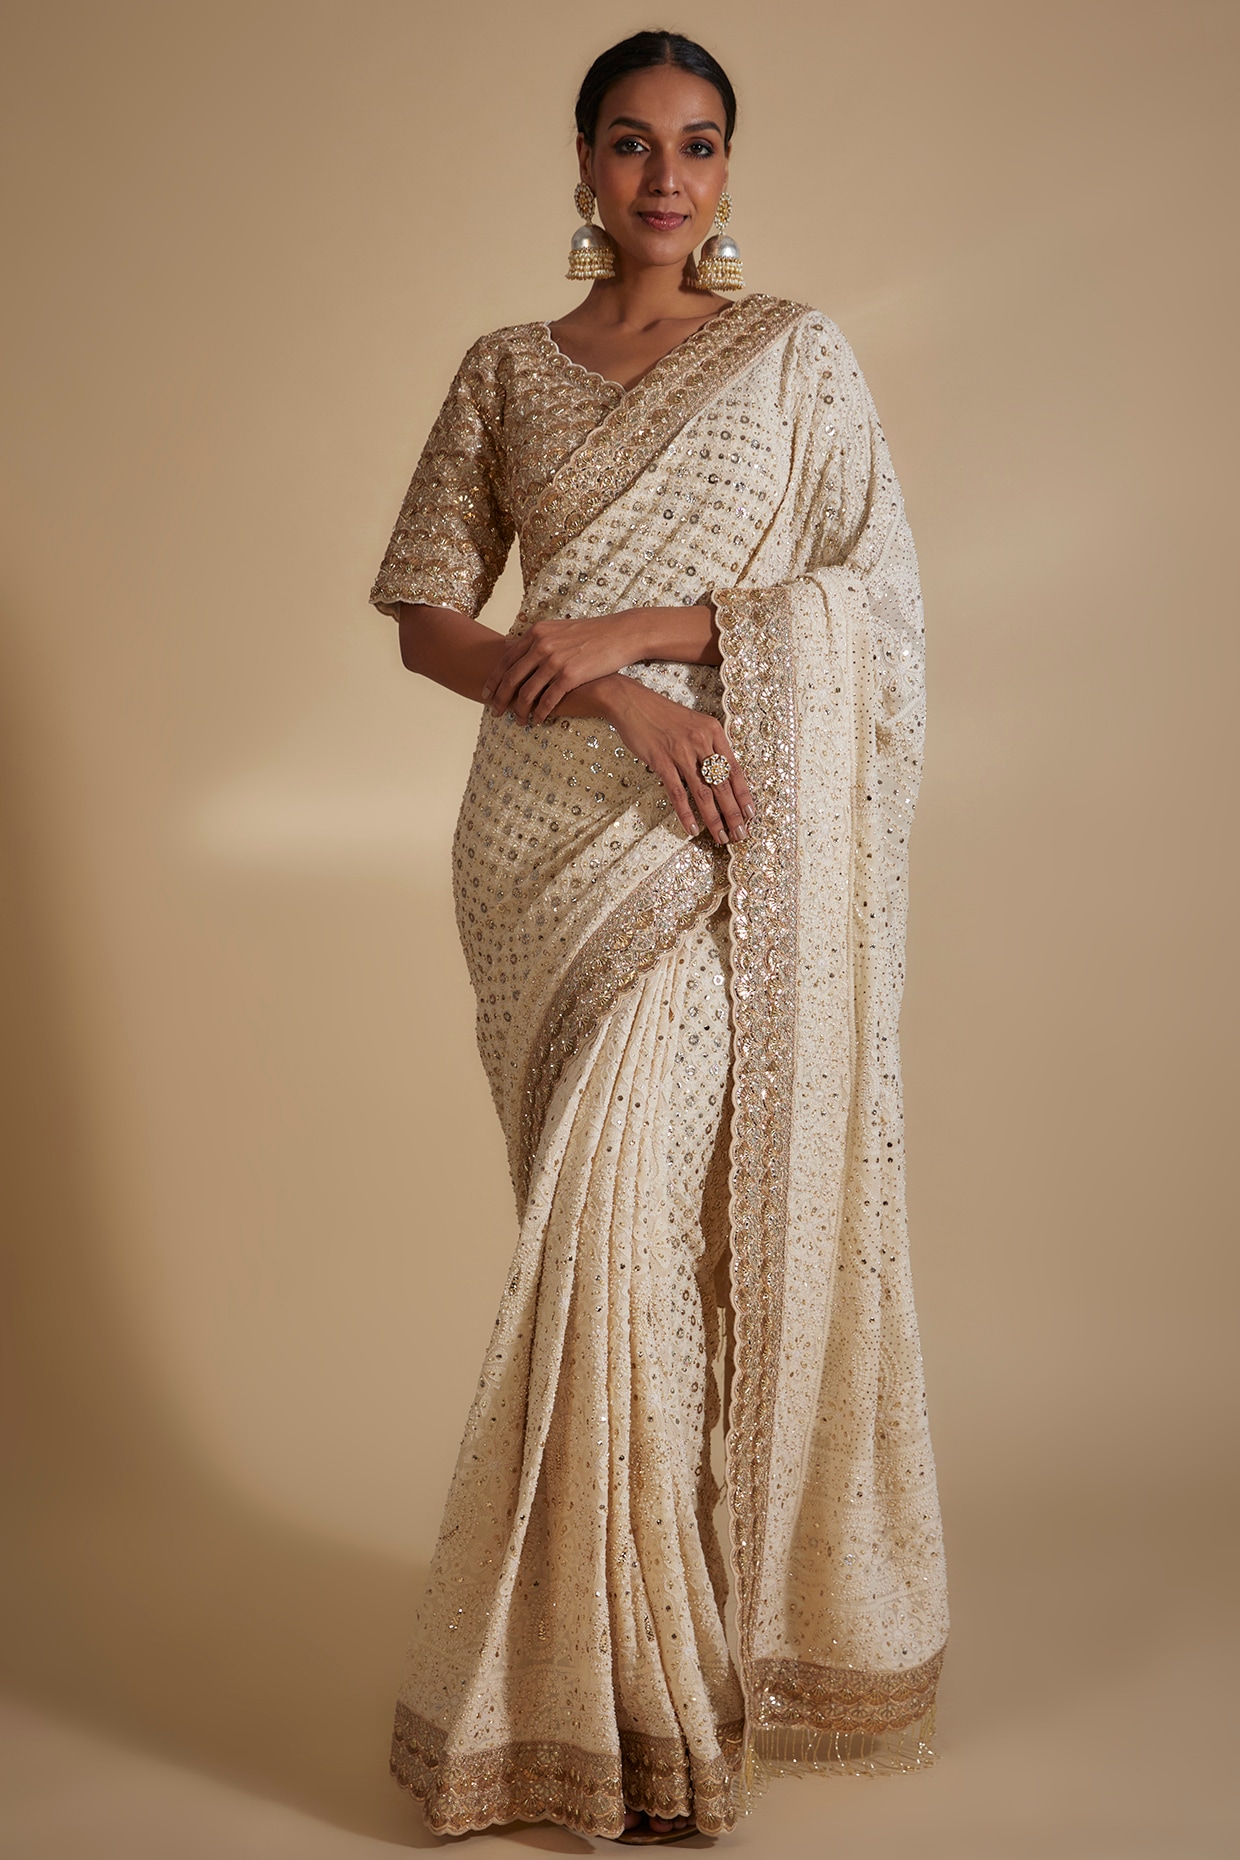 Sandal wood silk Designer Wedding Fancy Sarees Designer 27-35 at Rs 3000.00  | Surat| ID: 26612898562